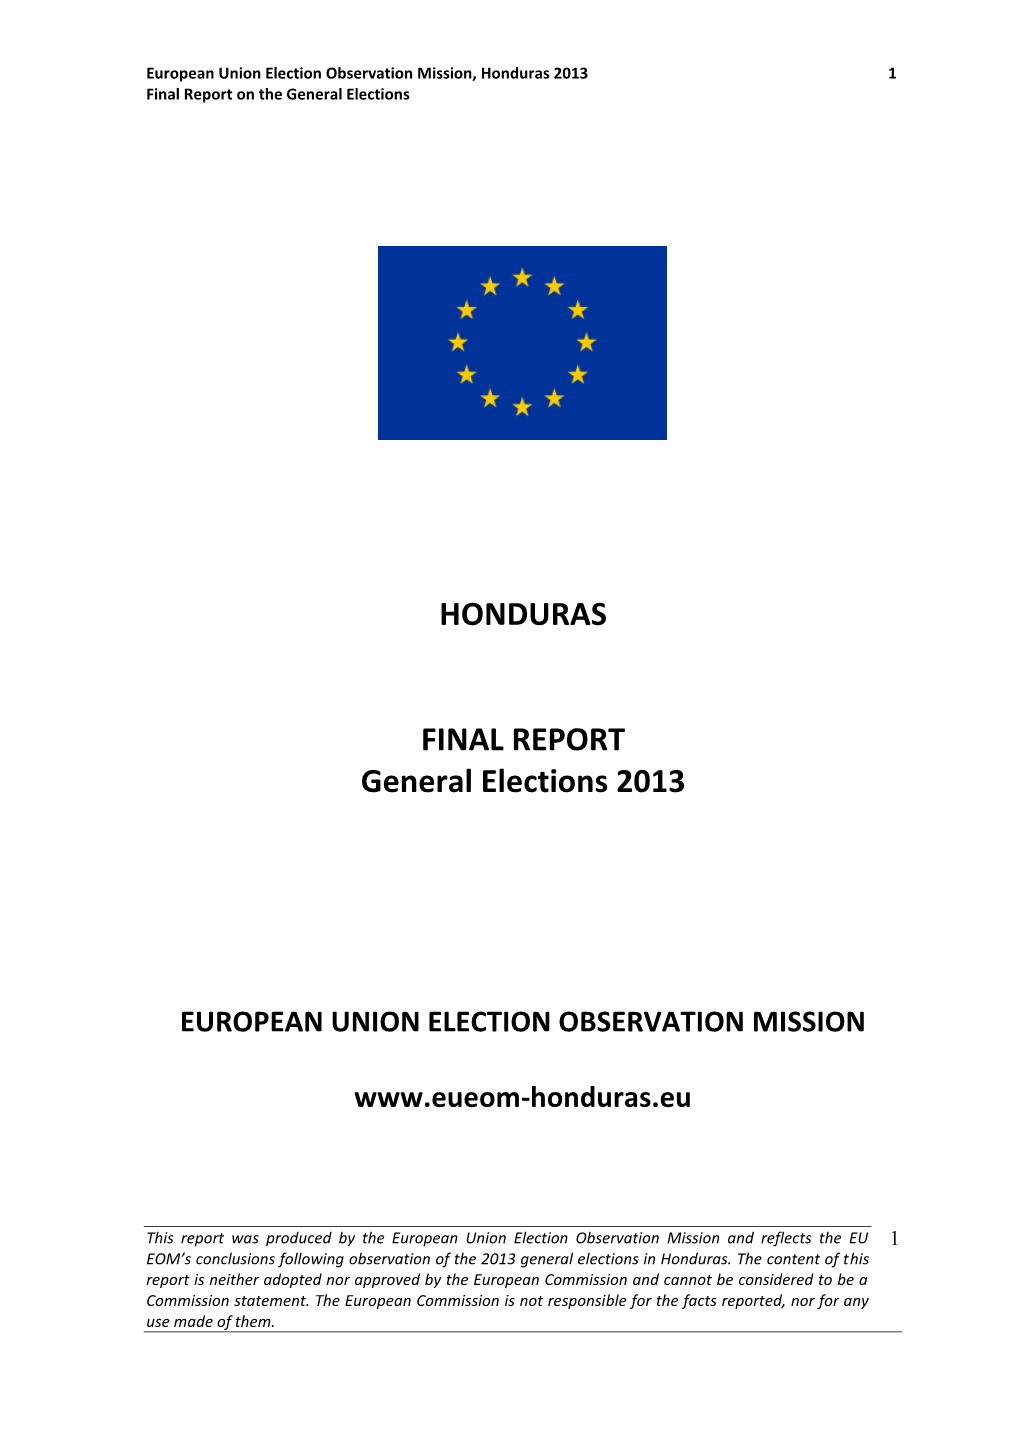 HONDURAS FINAL REPORT General Elections 2013